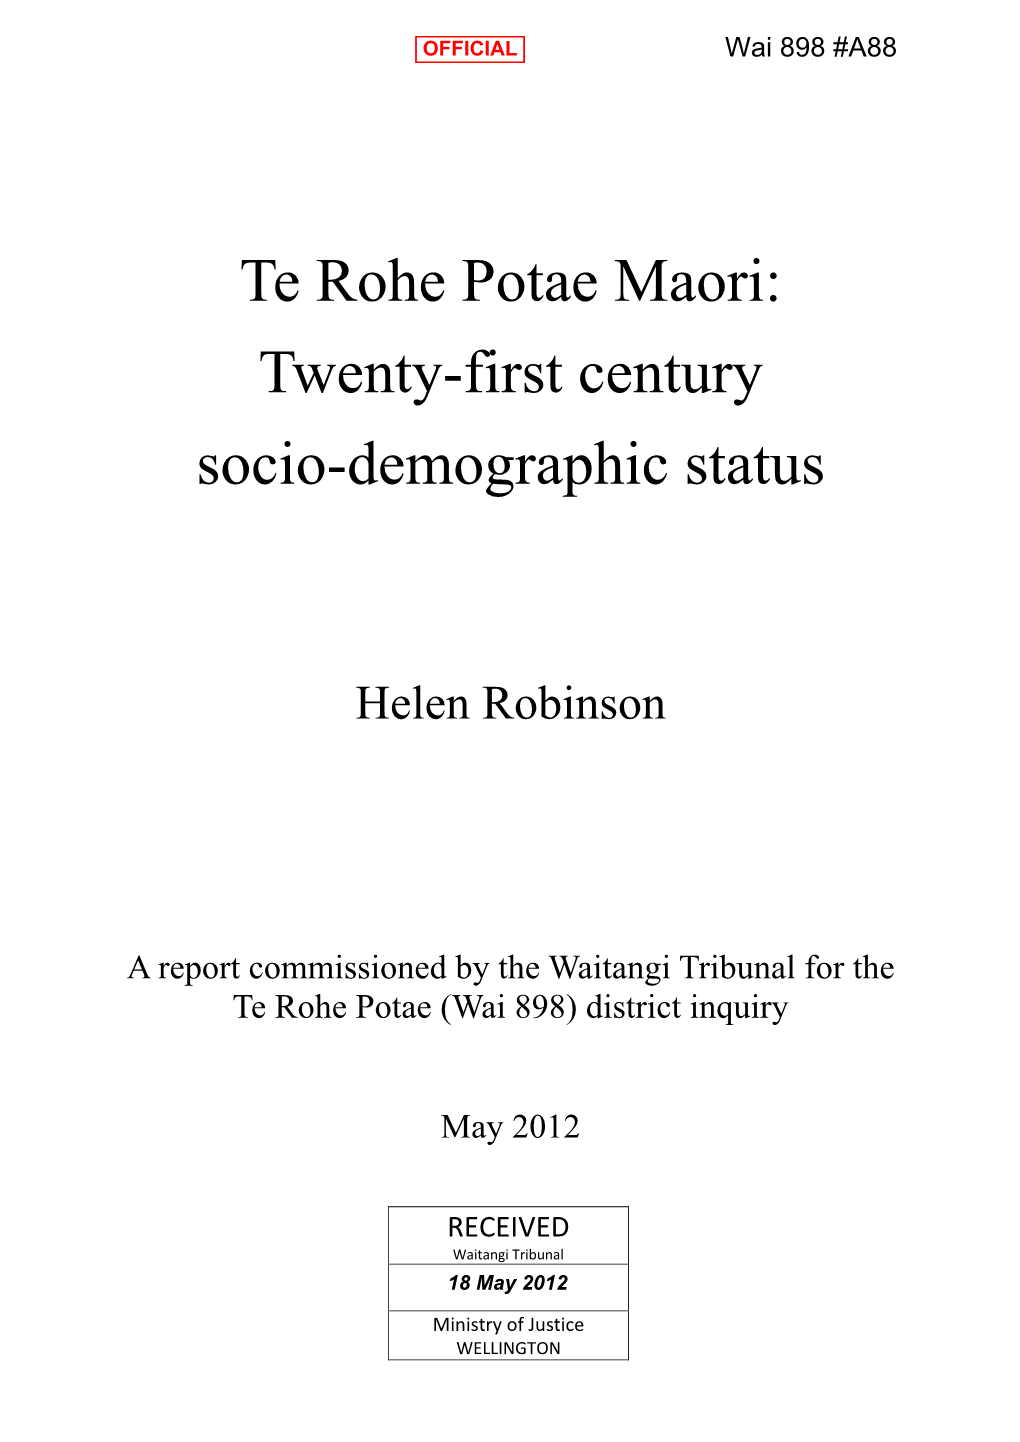 Te Rohe Potae Maori: Twenty-First Century Socio-Demographic Status